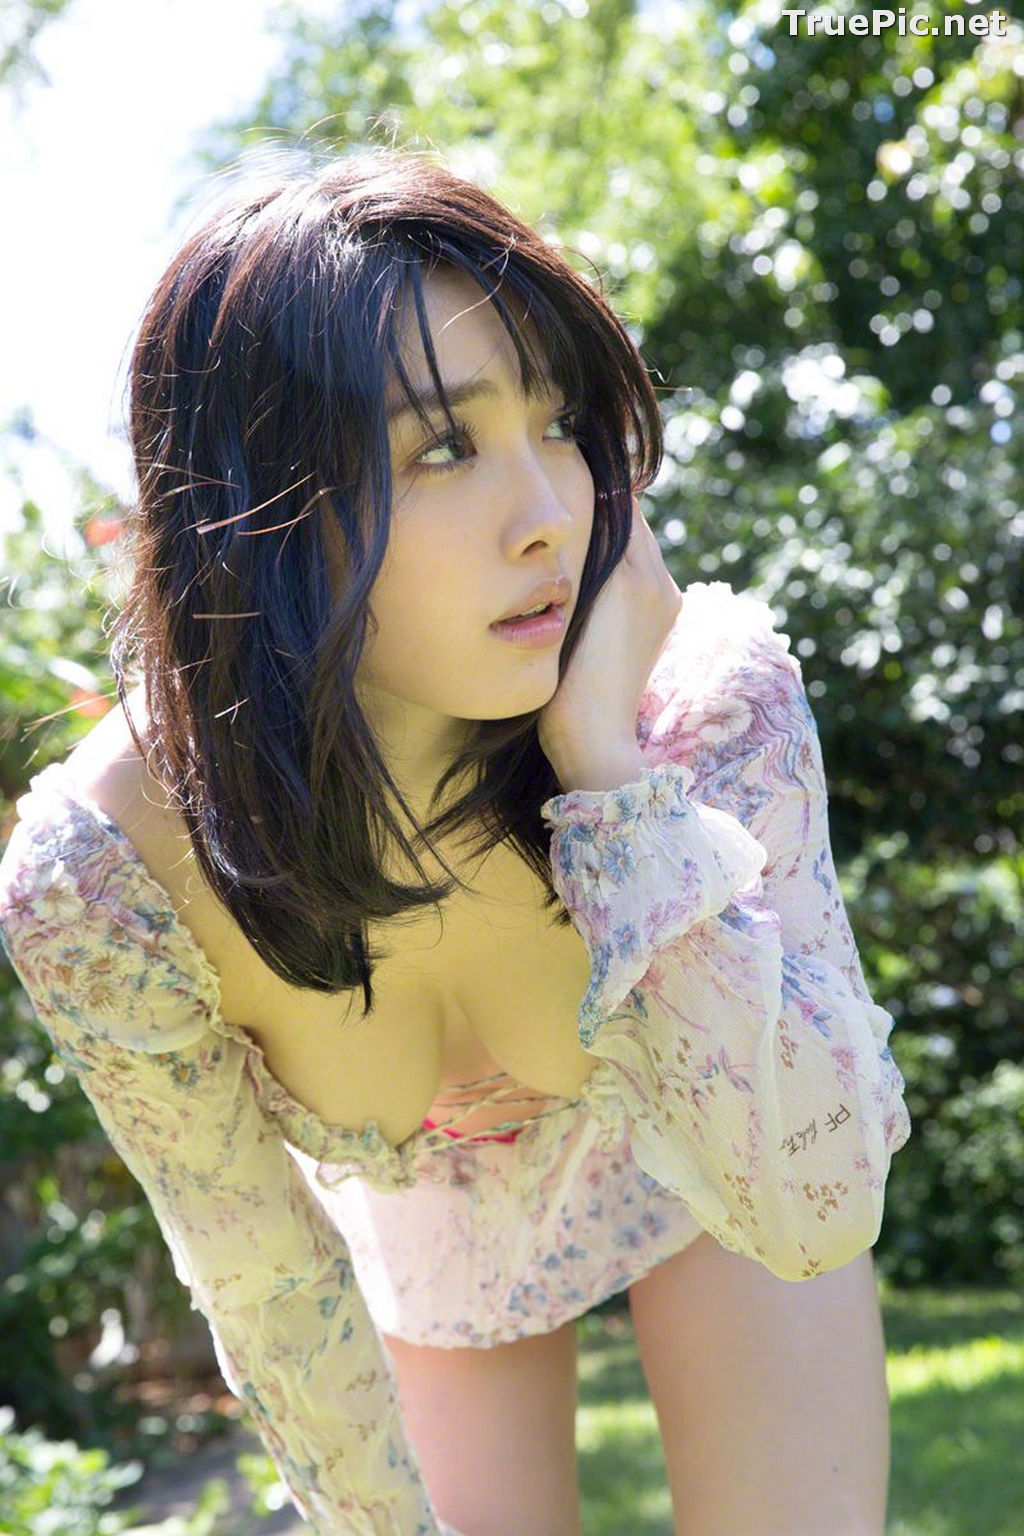 Image Wanibooks No.127 - Japanese Gravure Idol and Actress - Anna Konno - TruePic.net - Picture-64